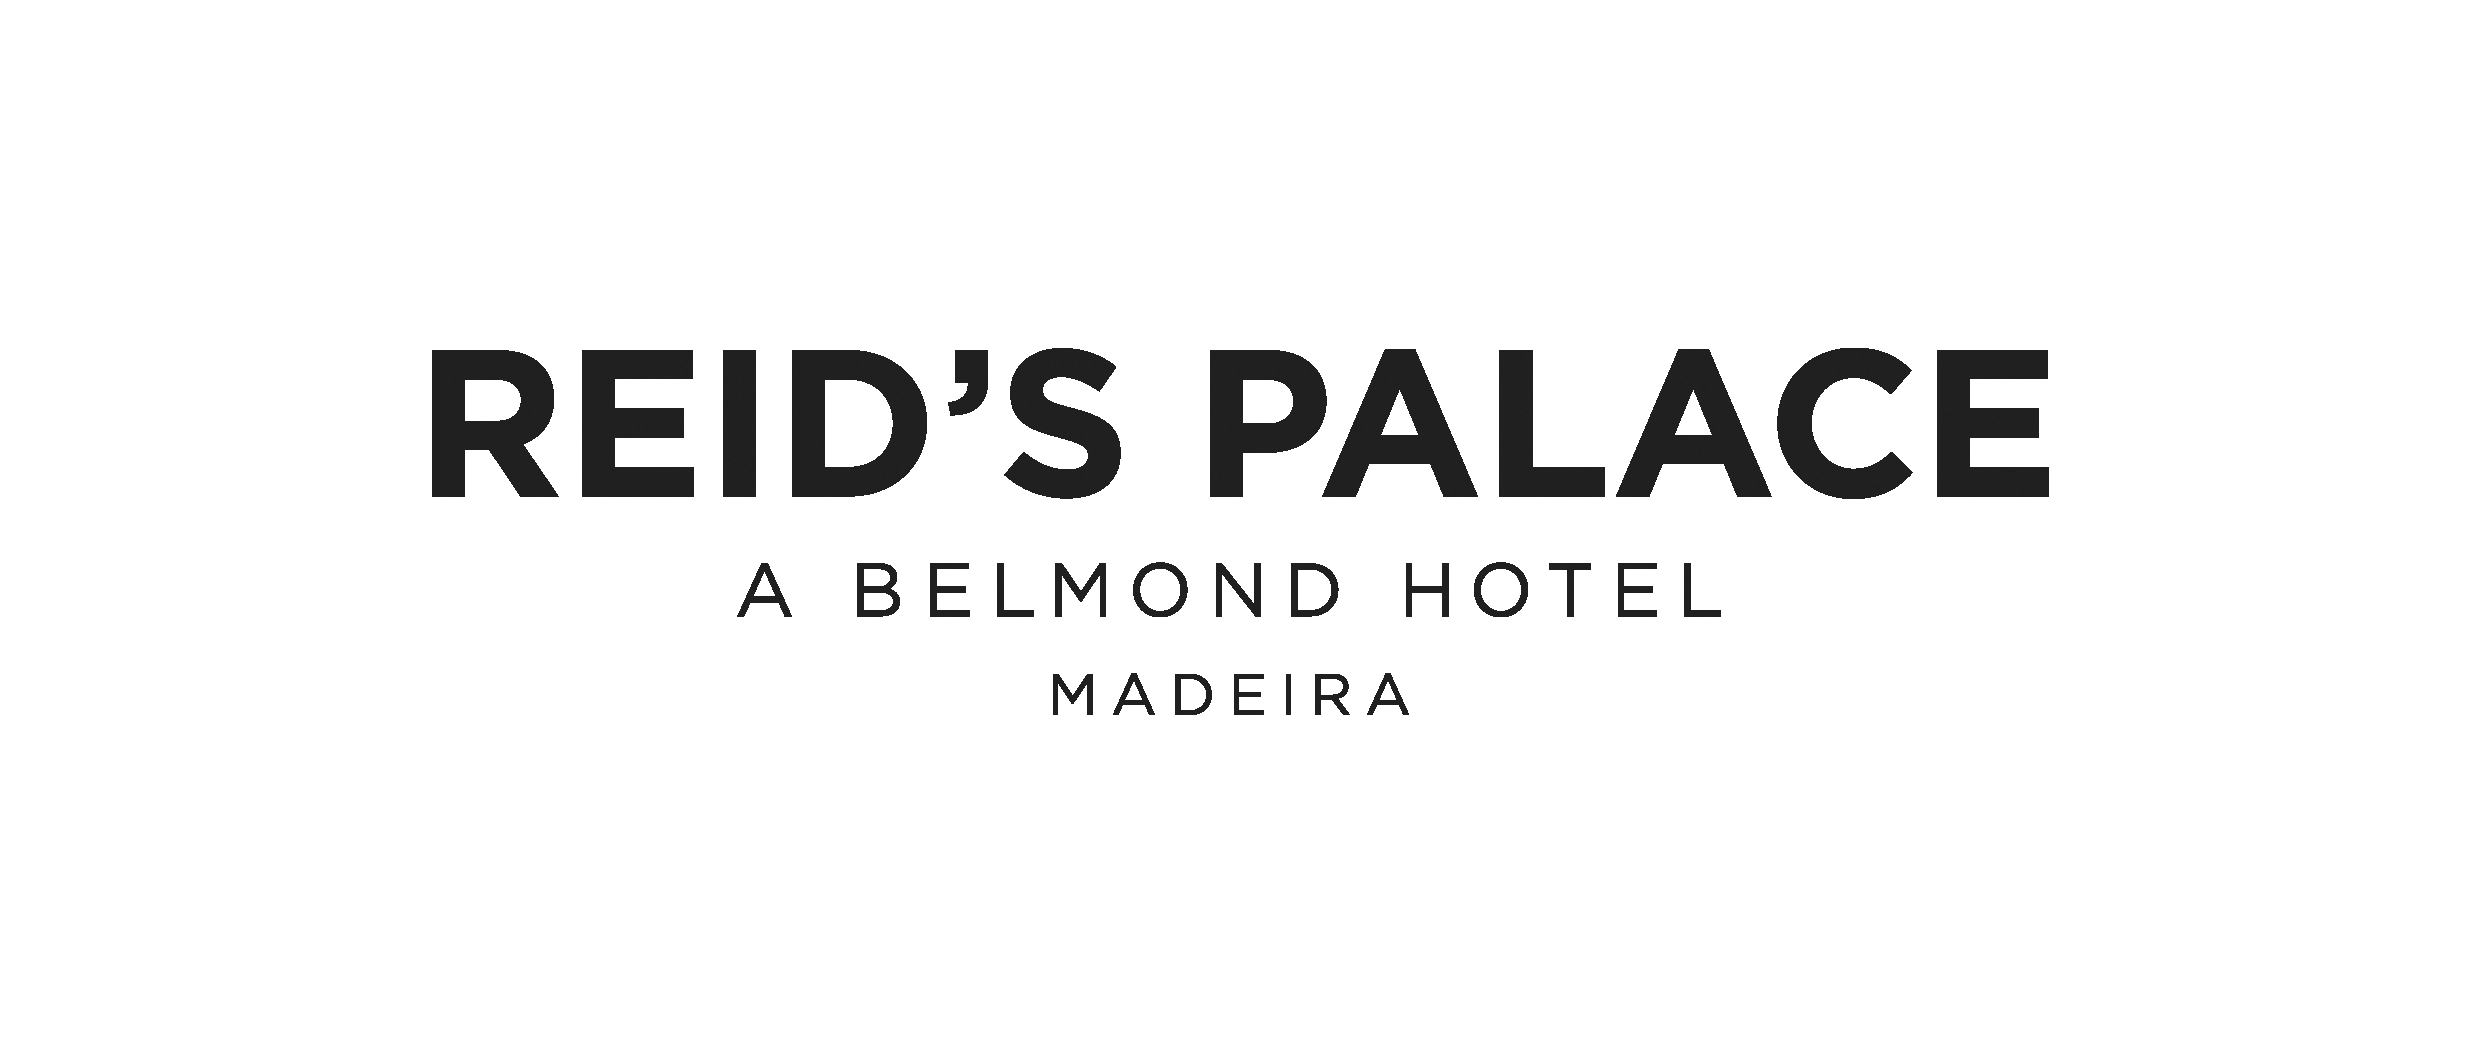 Reid's Palace, A Belmond Hotel